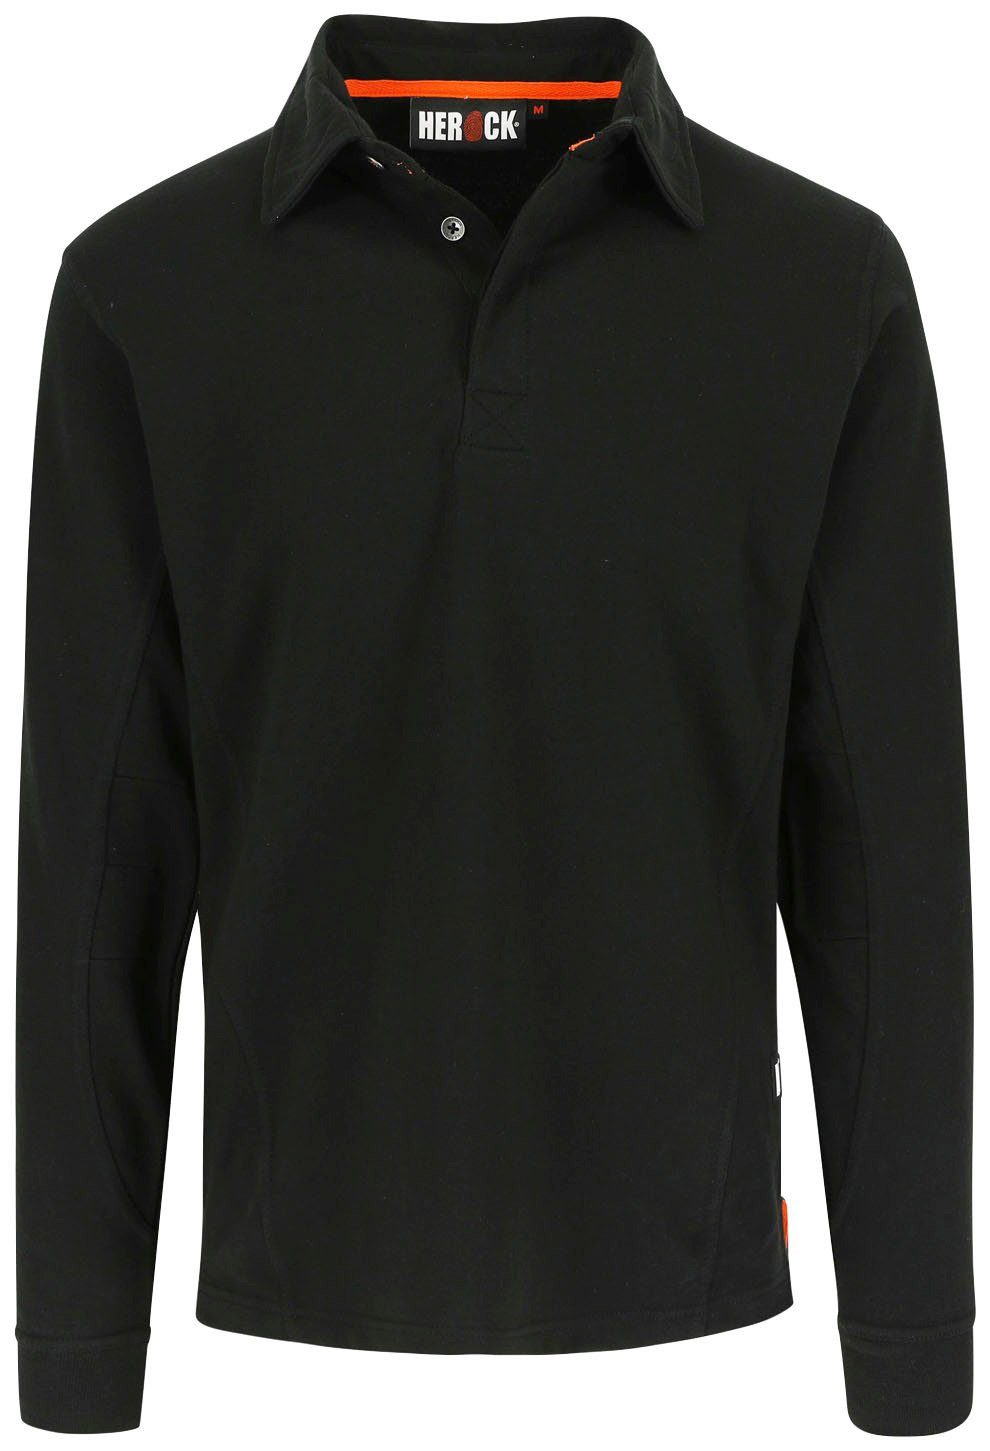 Herock Langarm-Poloshirt Troja Polo Langärmlig Tragegefühl, verschiedene figurformend, leicht Angenehmes schwarz Farben